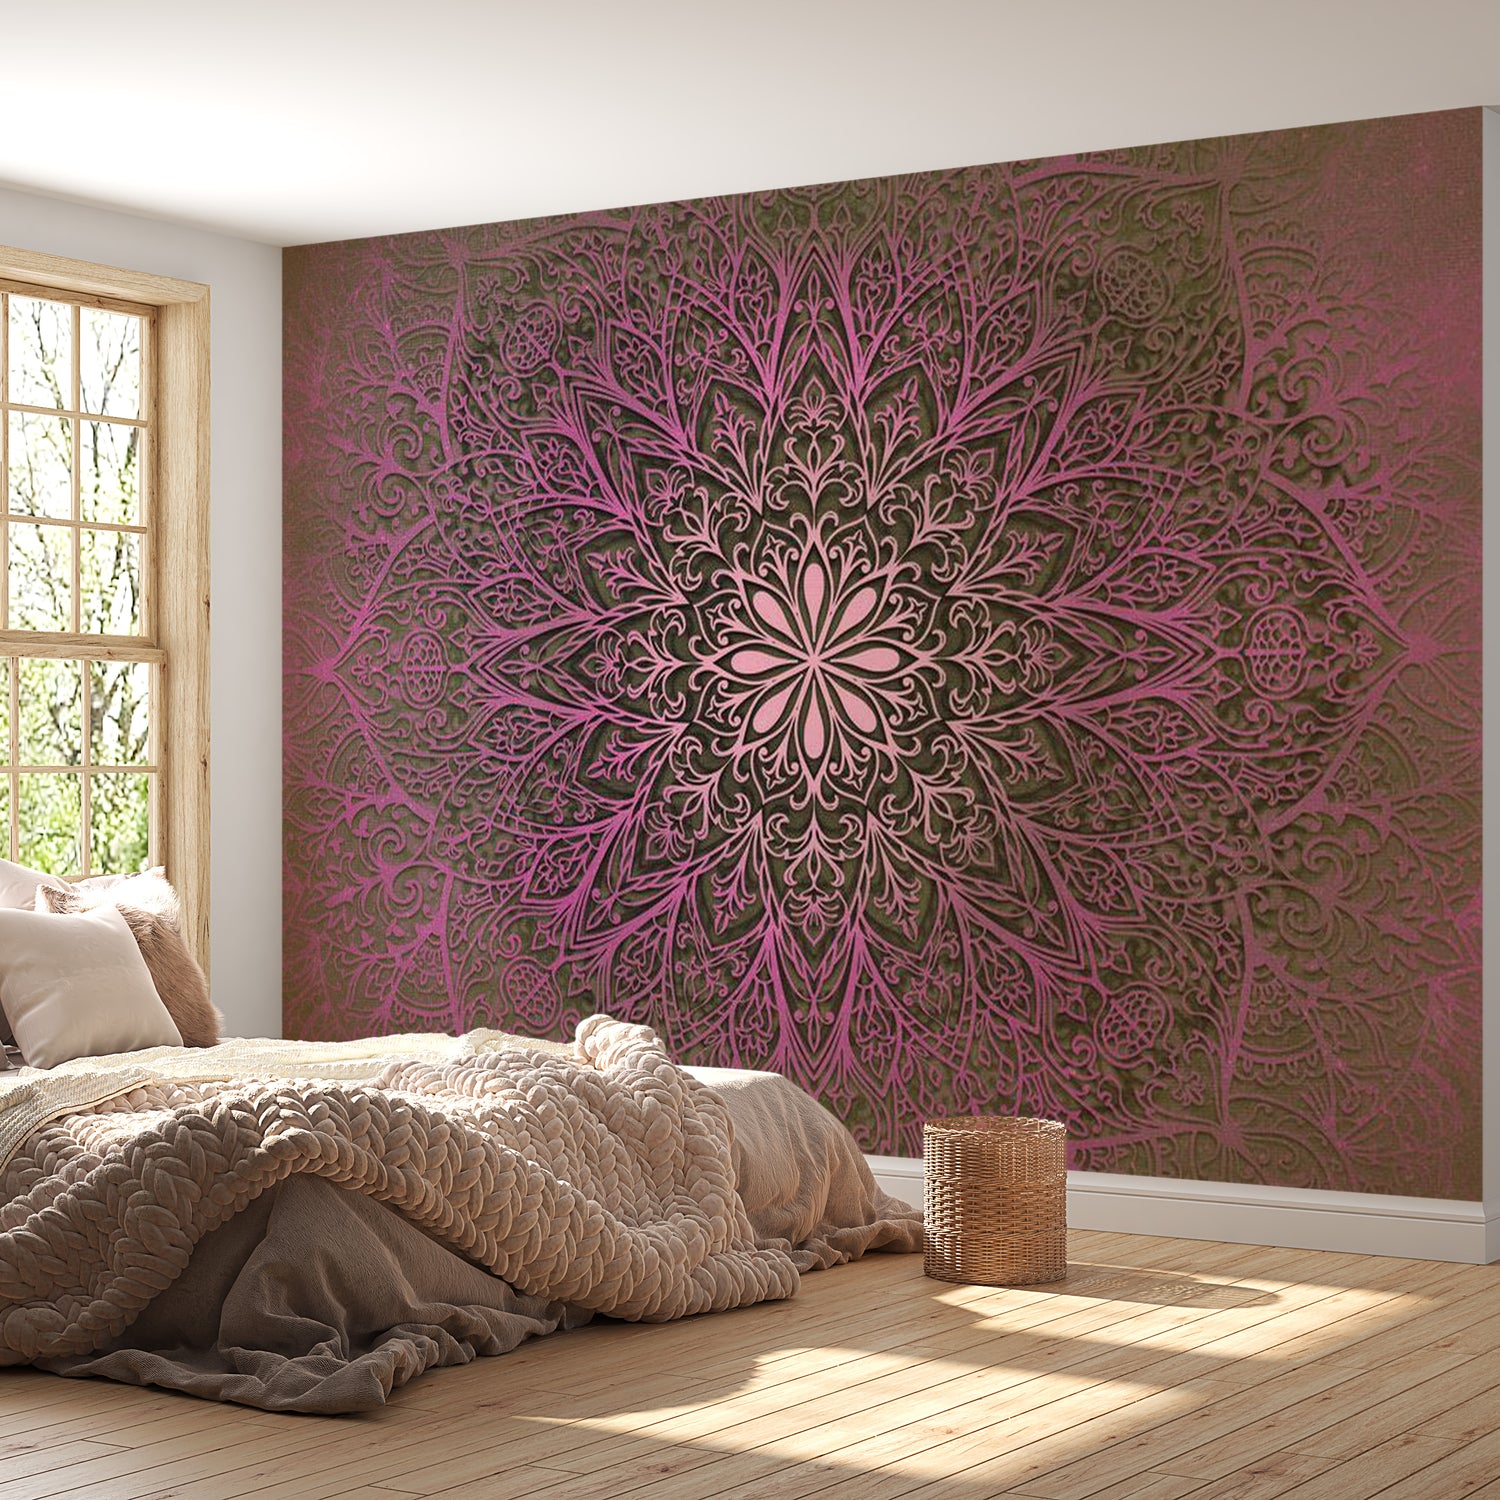 Peel & Stick Mandala Wall Mural - Pink Mandala Of Love - Removable Wall Decals